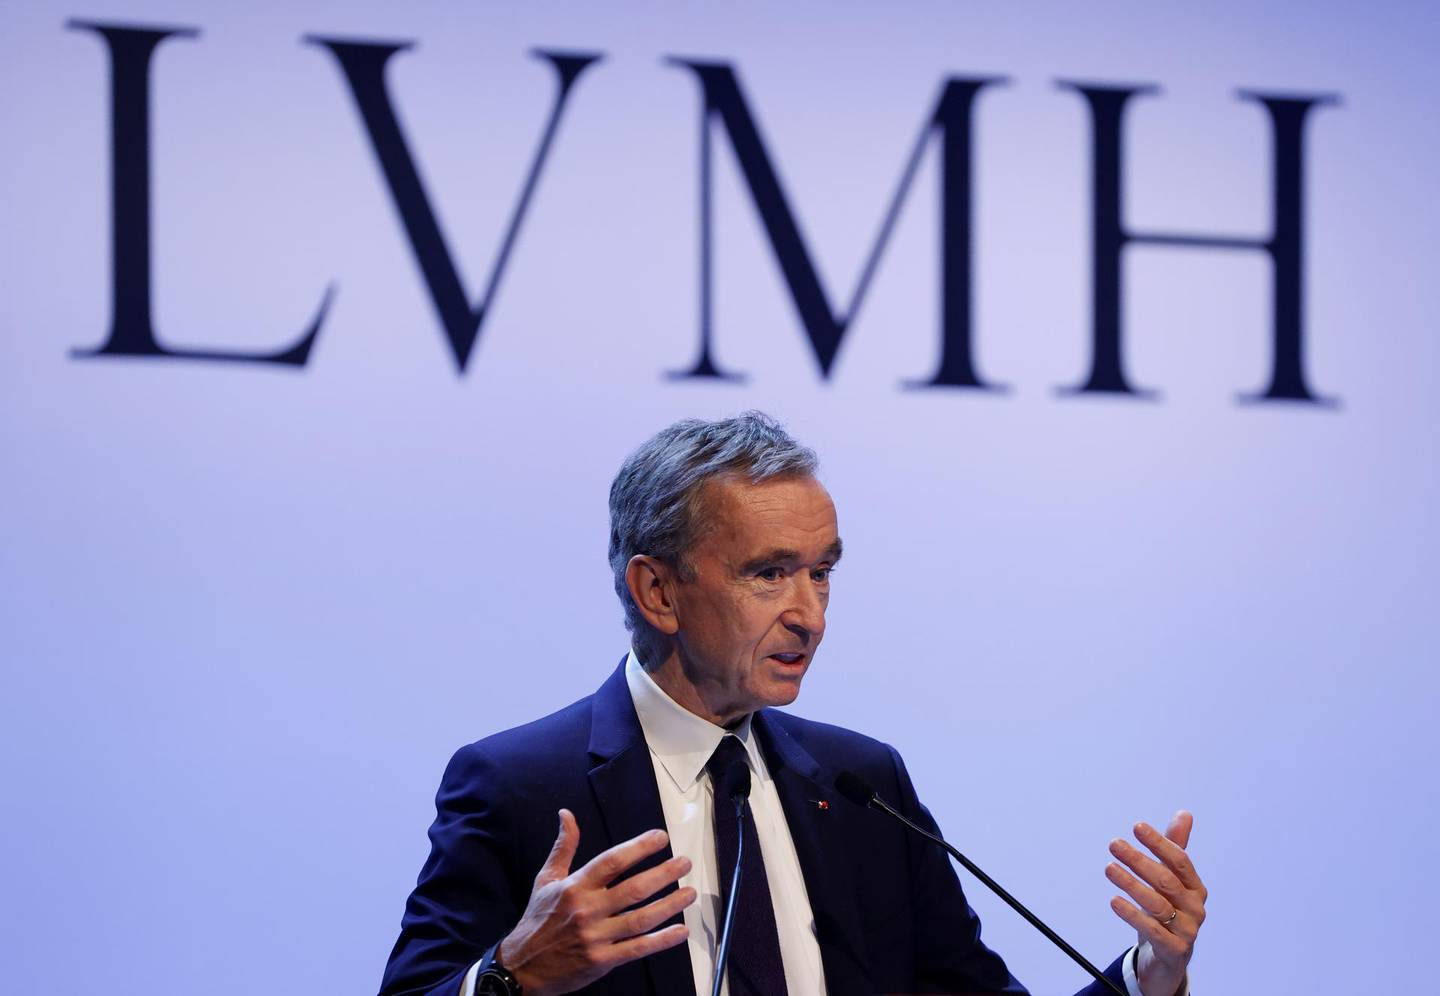 FILE PHOTO: LVMH luxury group Chief Executive Bernard Arnault announces their 2019 results in Paris, France, January 28, 2020. REUTERS/Christian Hartmann -/File Photo